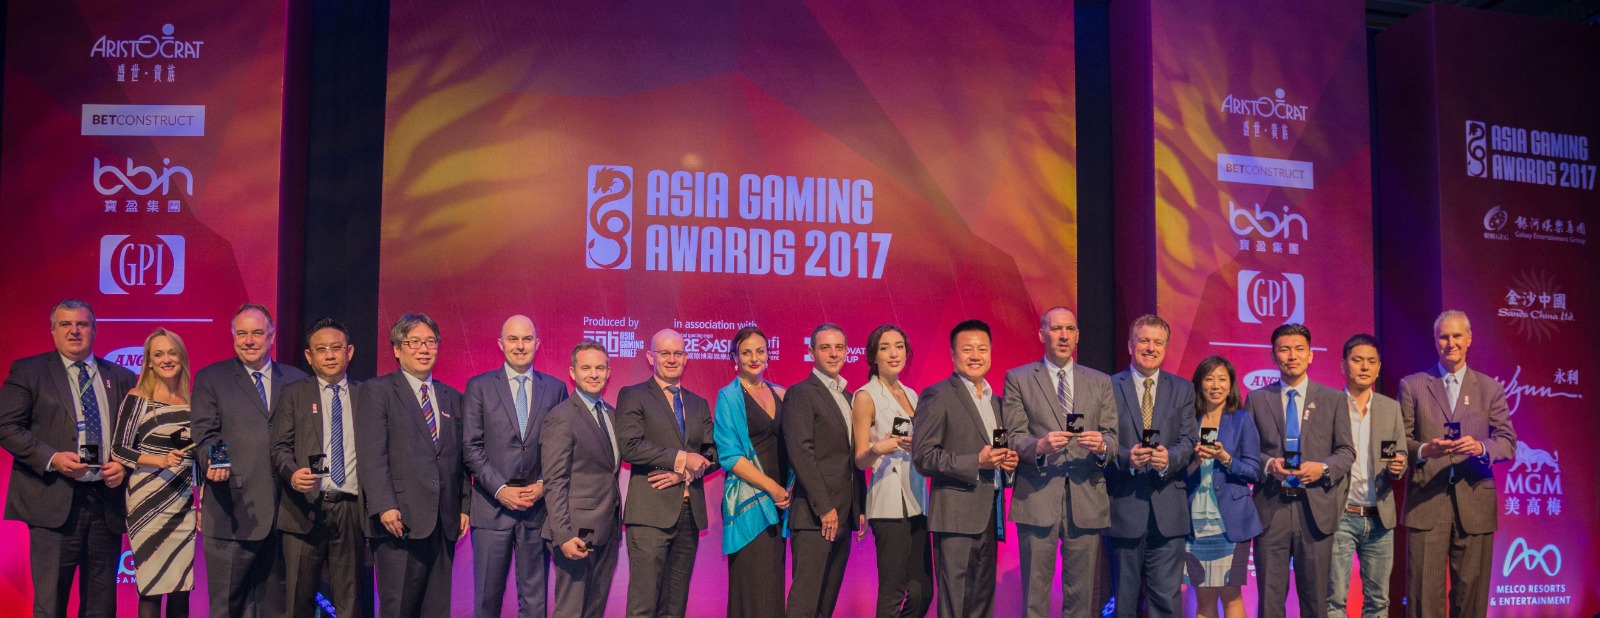 Asia Gaming Awards